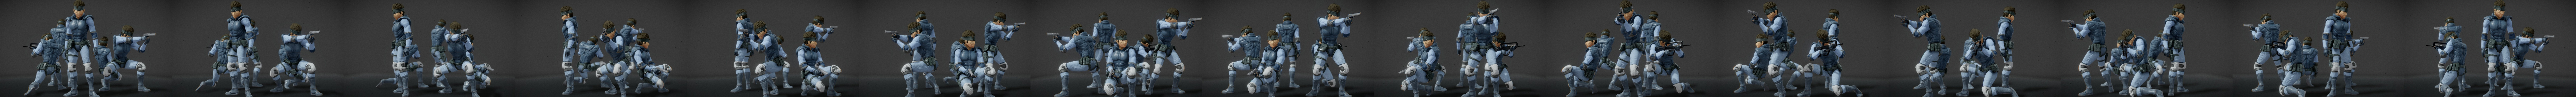 3D printing Solid Snake Metal Gear Solid 1 version fan art 3D